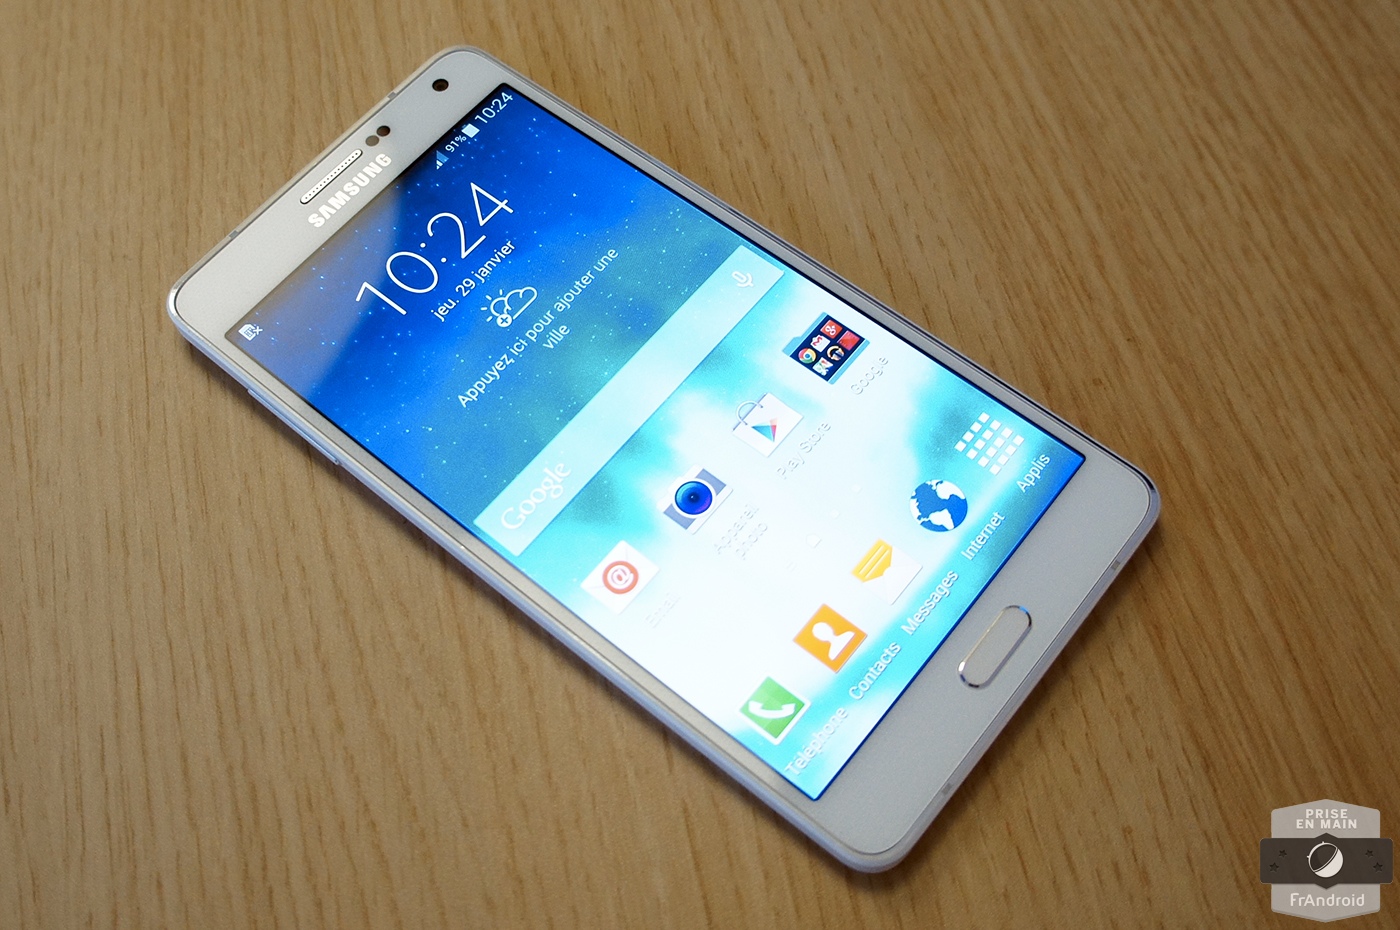 Prise en main du Samsung Galaxy A7 - FrAndroid - 1400 x 930 jpeg 449kB